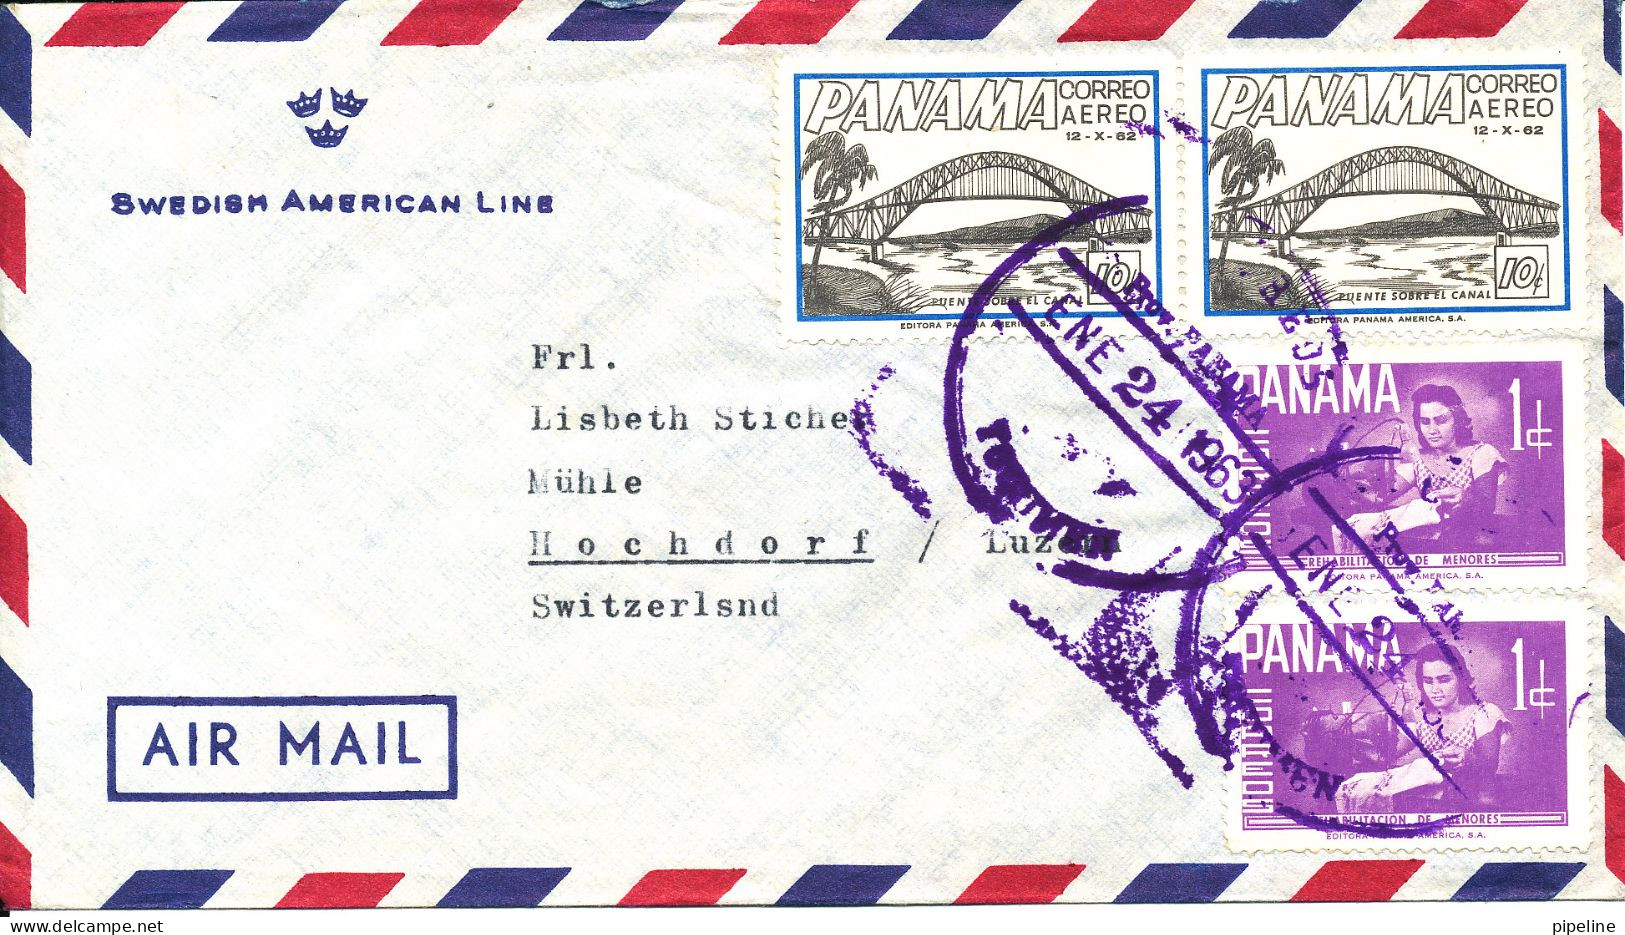 Panama Air Mail Cover Sent To Switzerland 24-1-1963 (Swedish American Line) - Panama